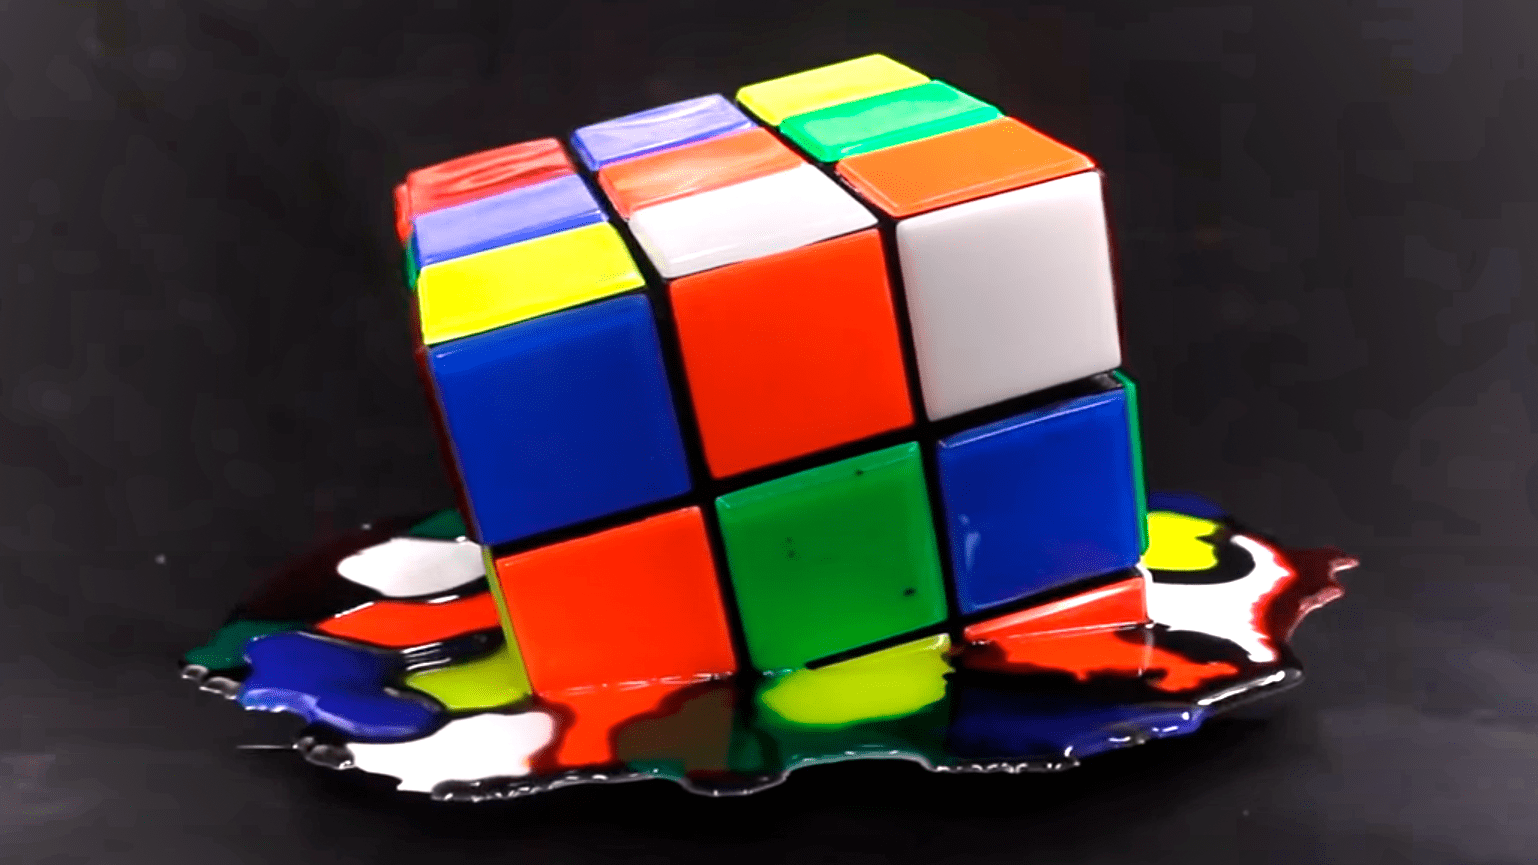 Cube под. Кубик Рубика плавится. Открытый кубик рубик креативный фон 3д. Плавящийся кубик рубик картинка для заставки.